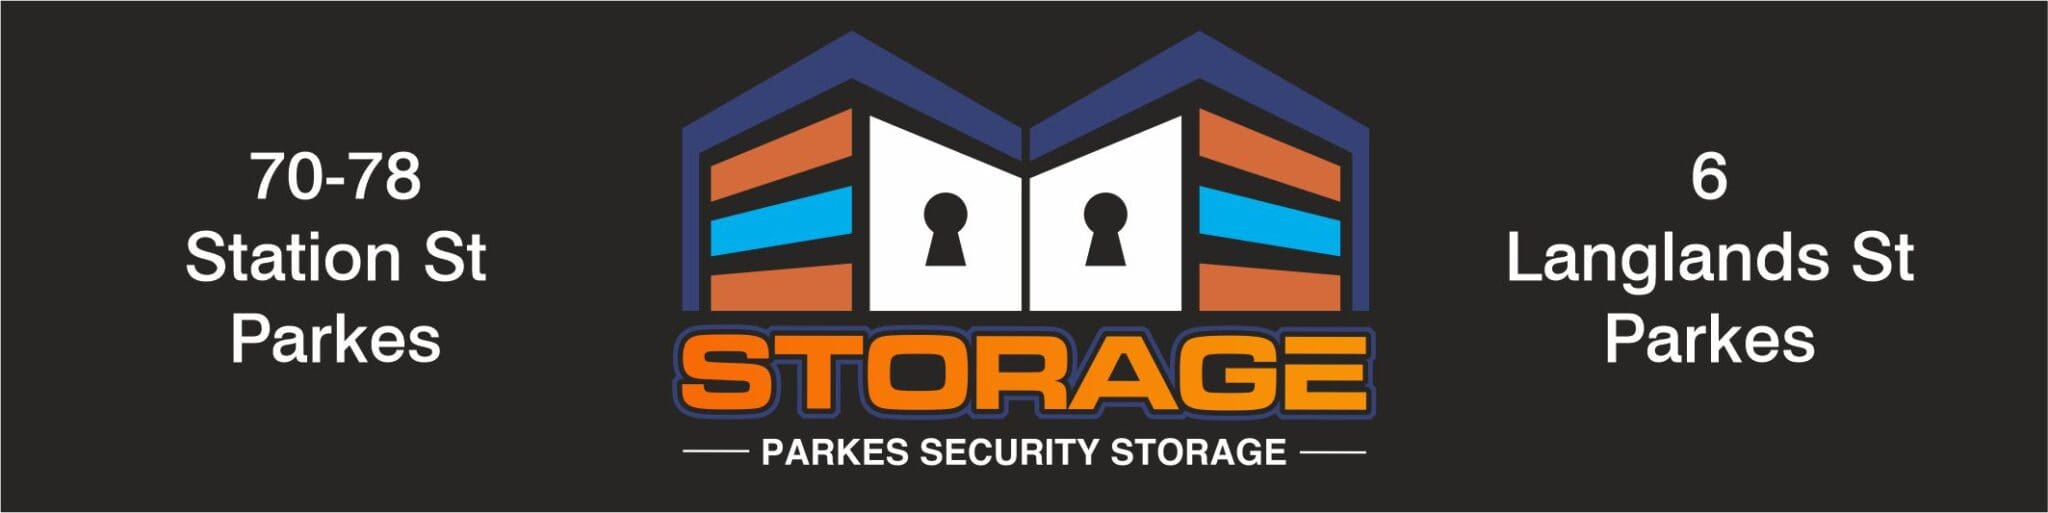 Parkes Security Storage sponsor logo